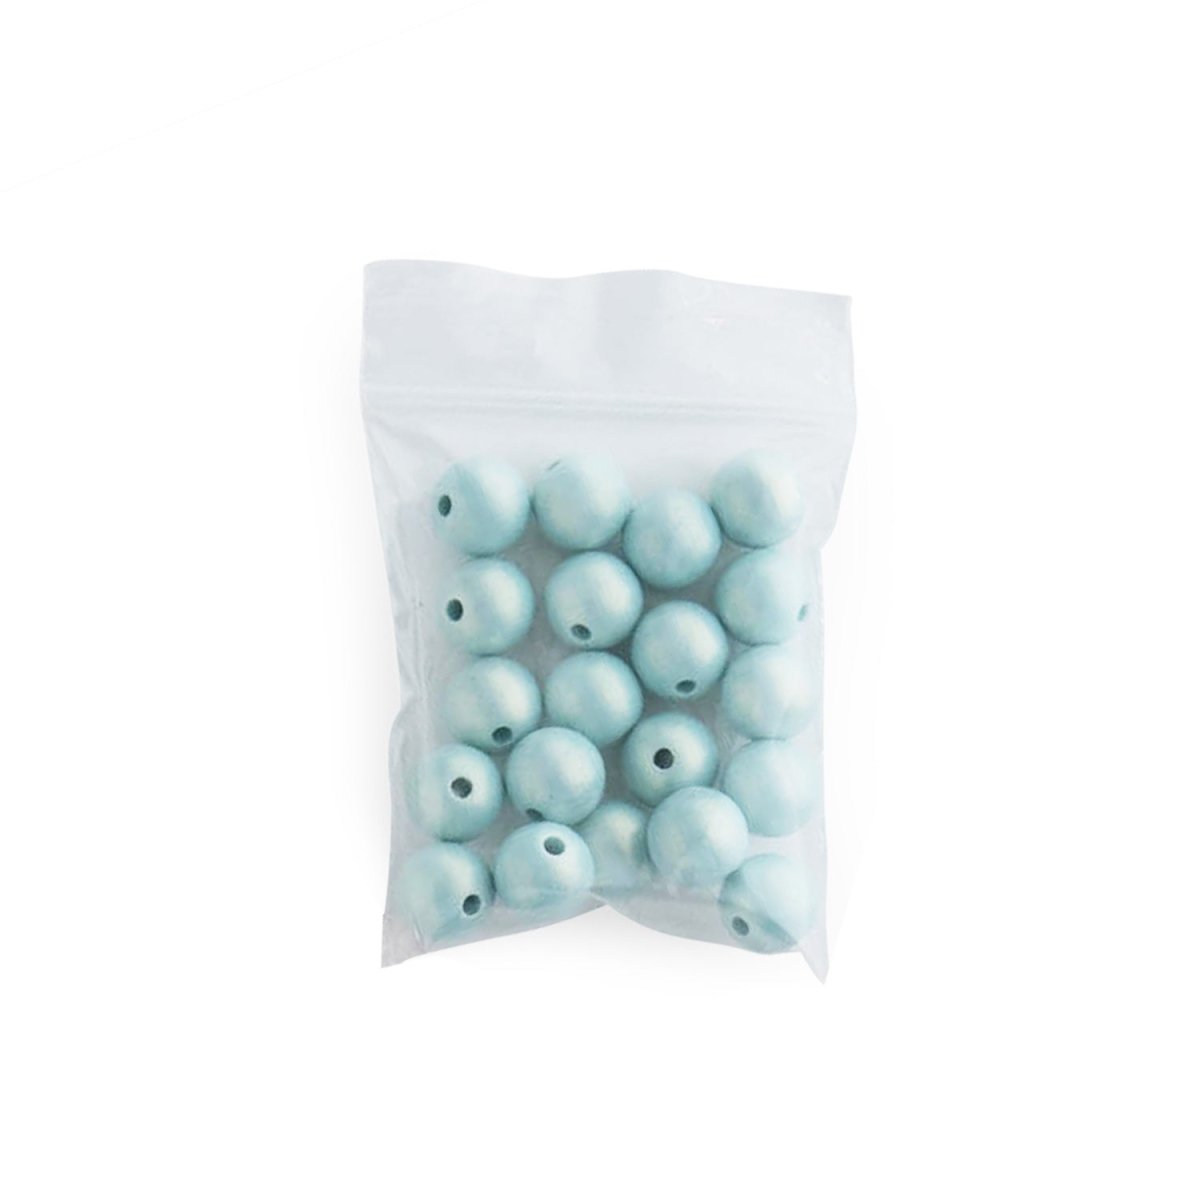 Acrylic Round Beads Matte Metallic 10mm Blue from Cara & Co Craft Supply